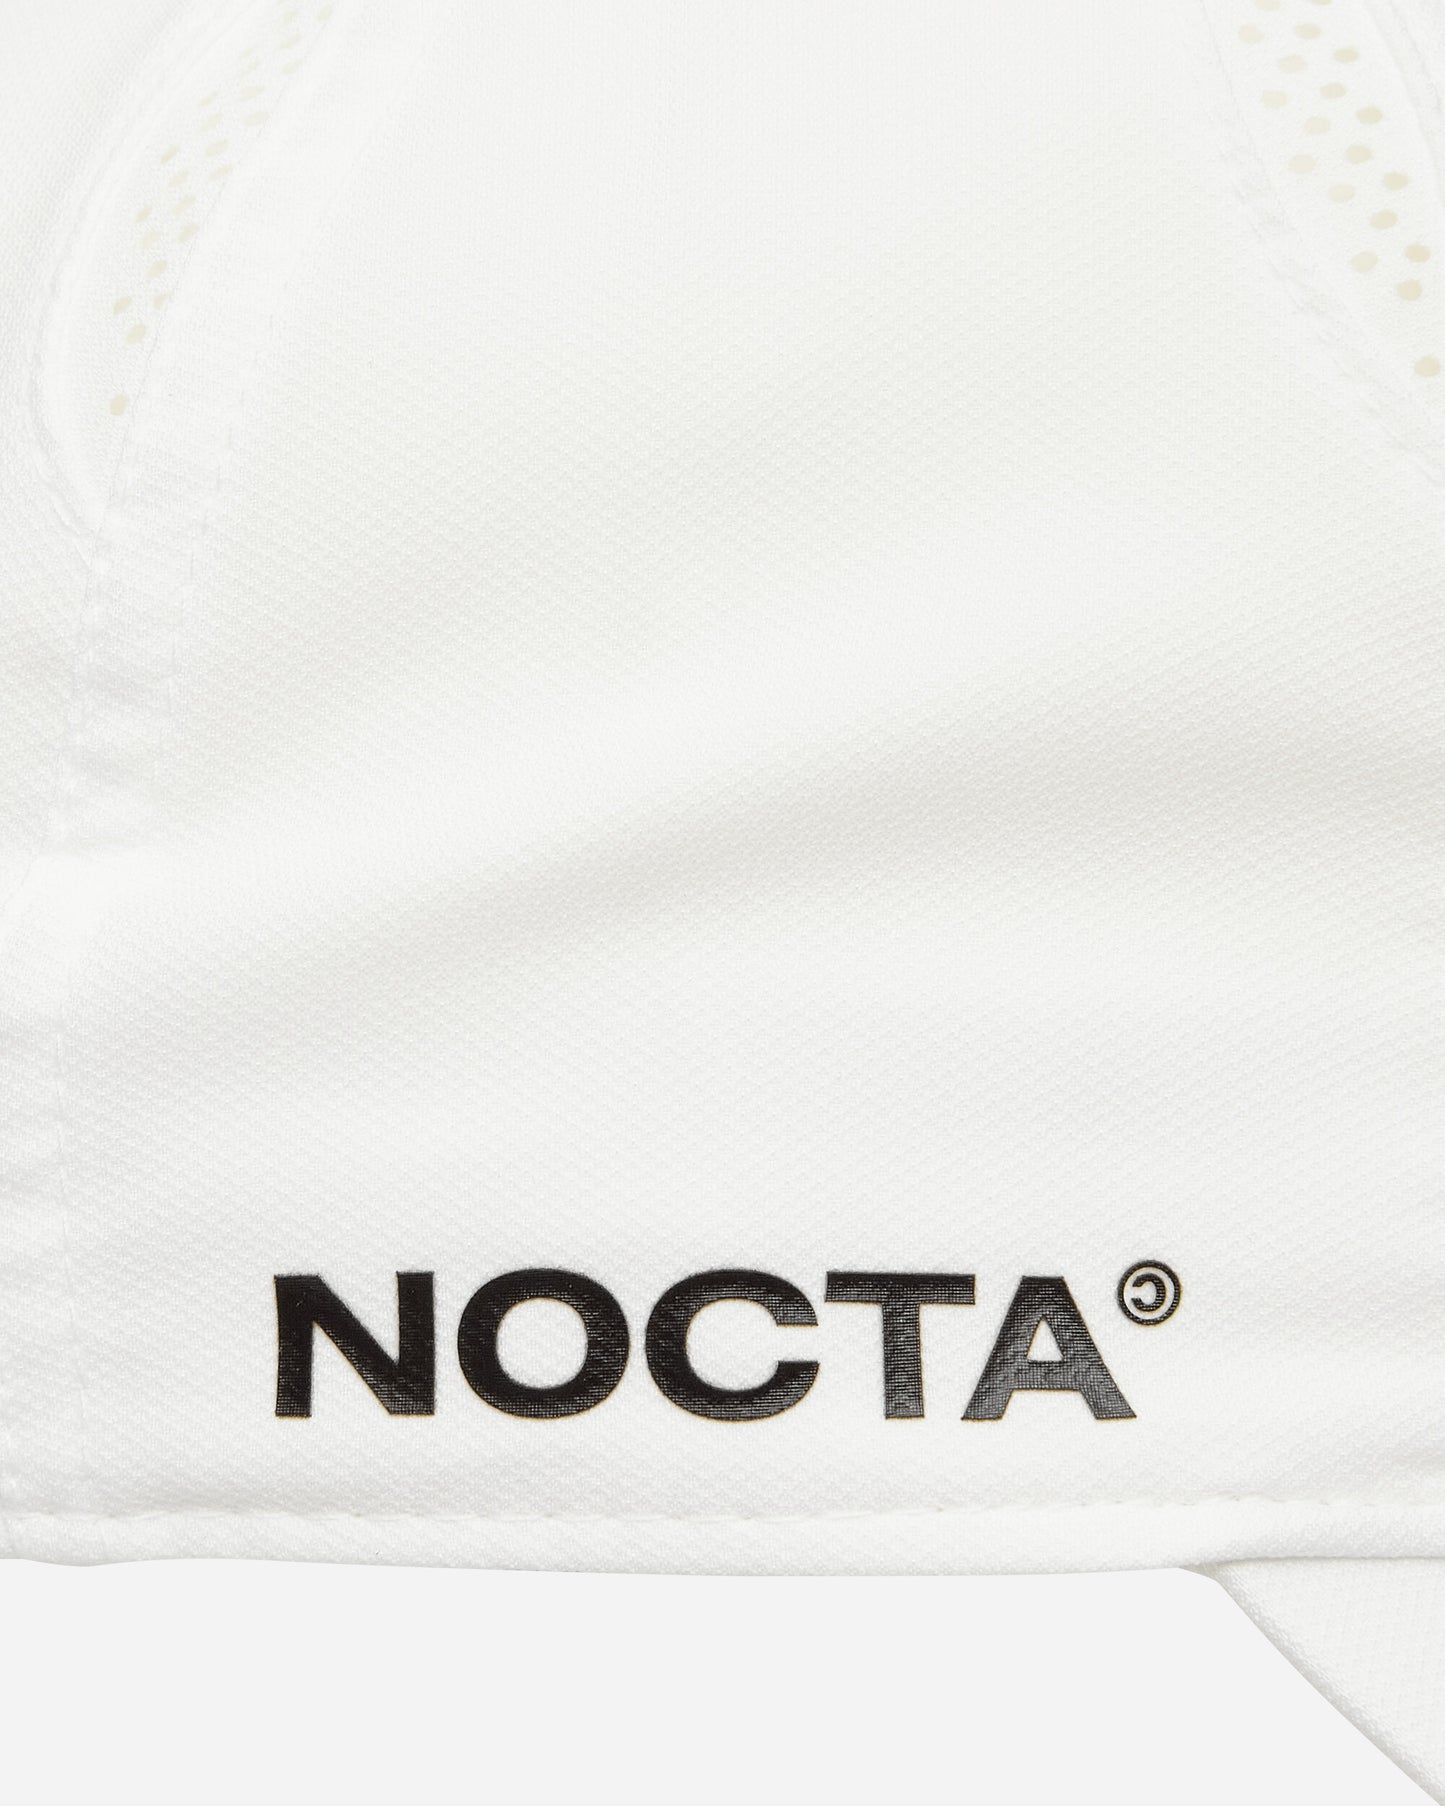 Nike U Nrg Club Cap Nocta-Uscb White/Black Hats Caps FV5541-100